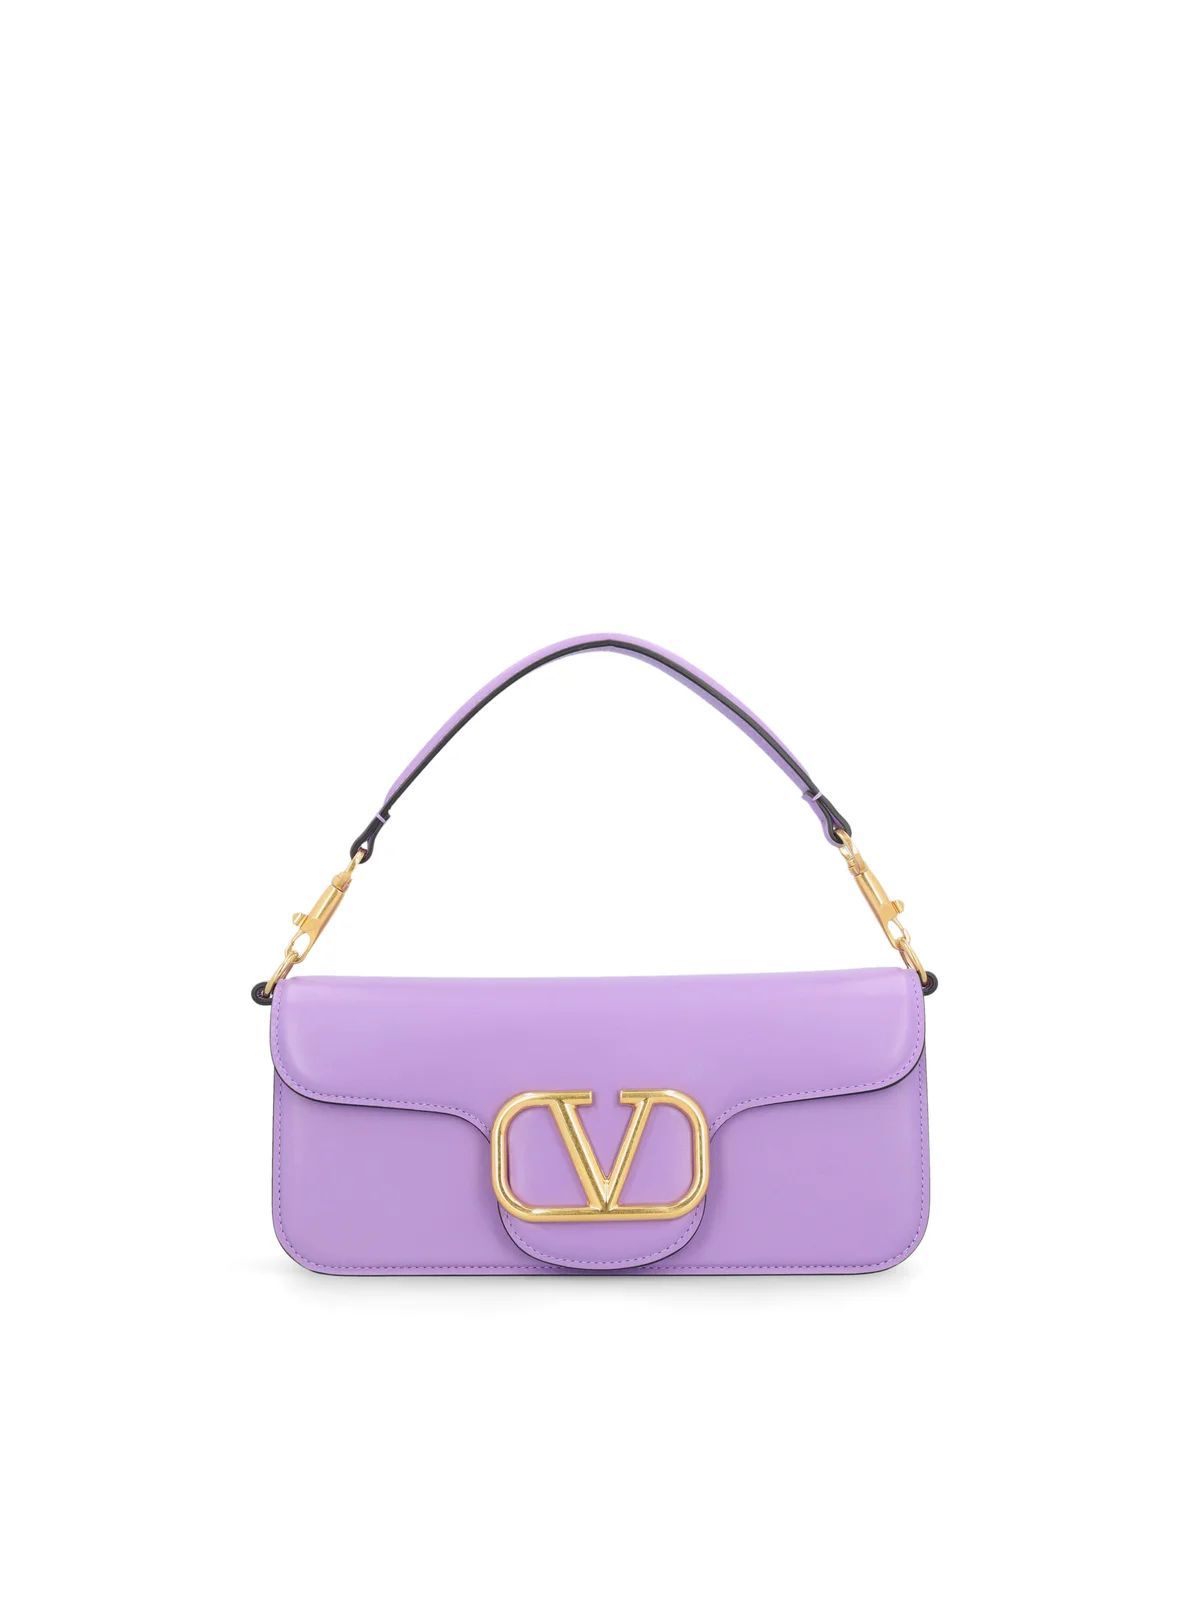 Valentino VLogo Plaque Foldover Top Clutch Bag | Cettire Global